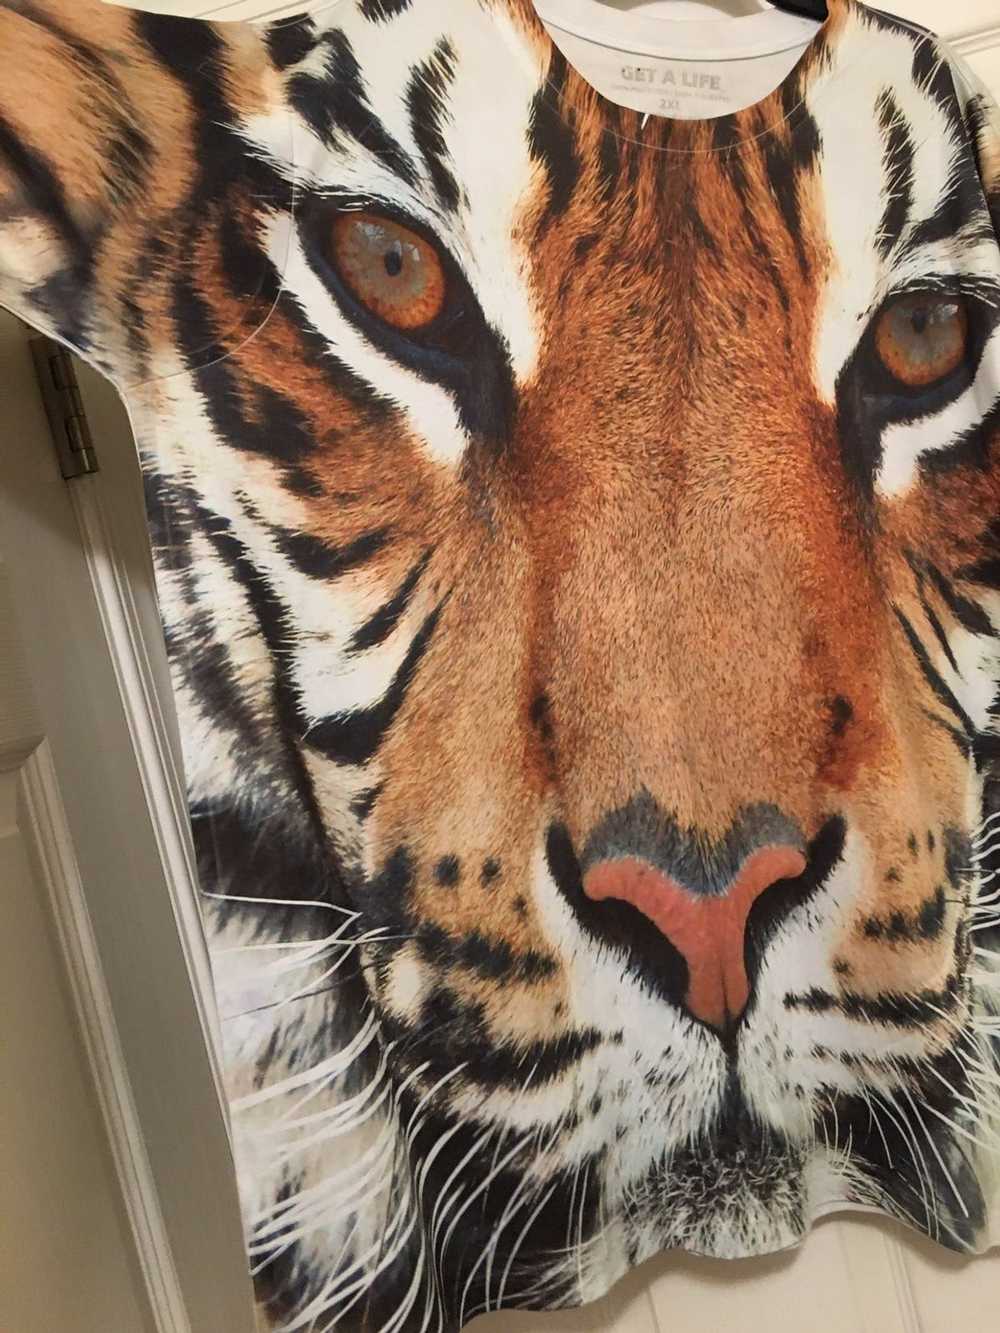 Streetwear Tiger faces - get a life tshirt - image 2